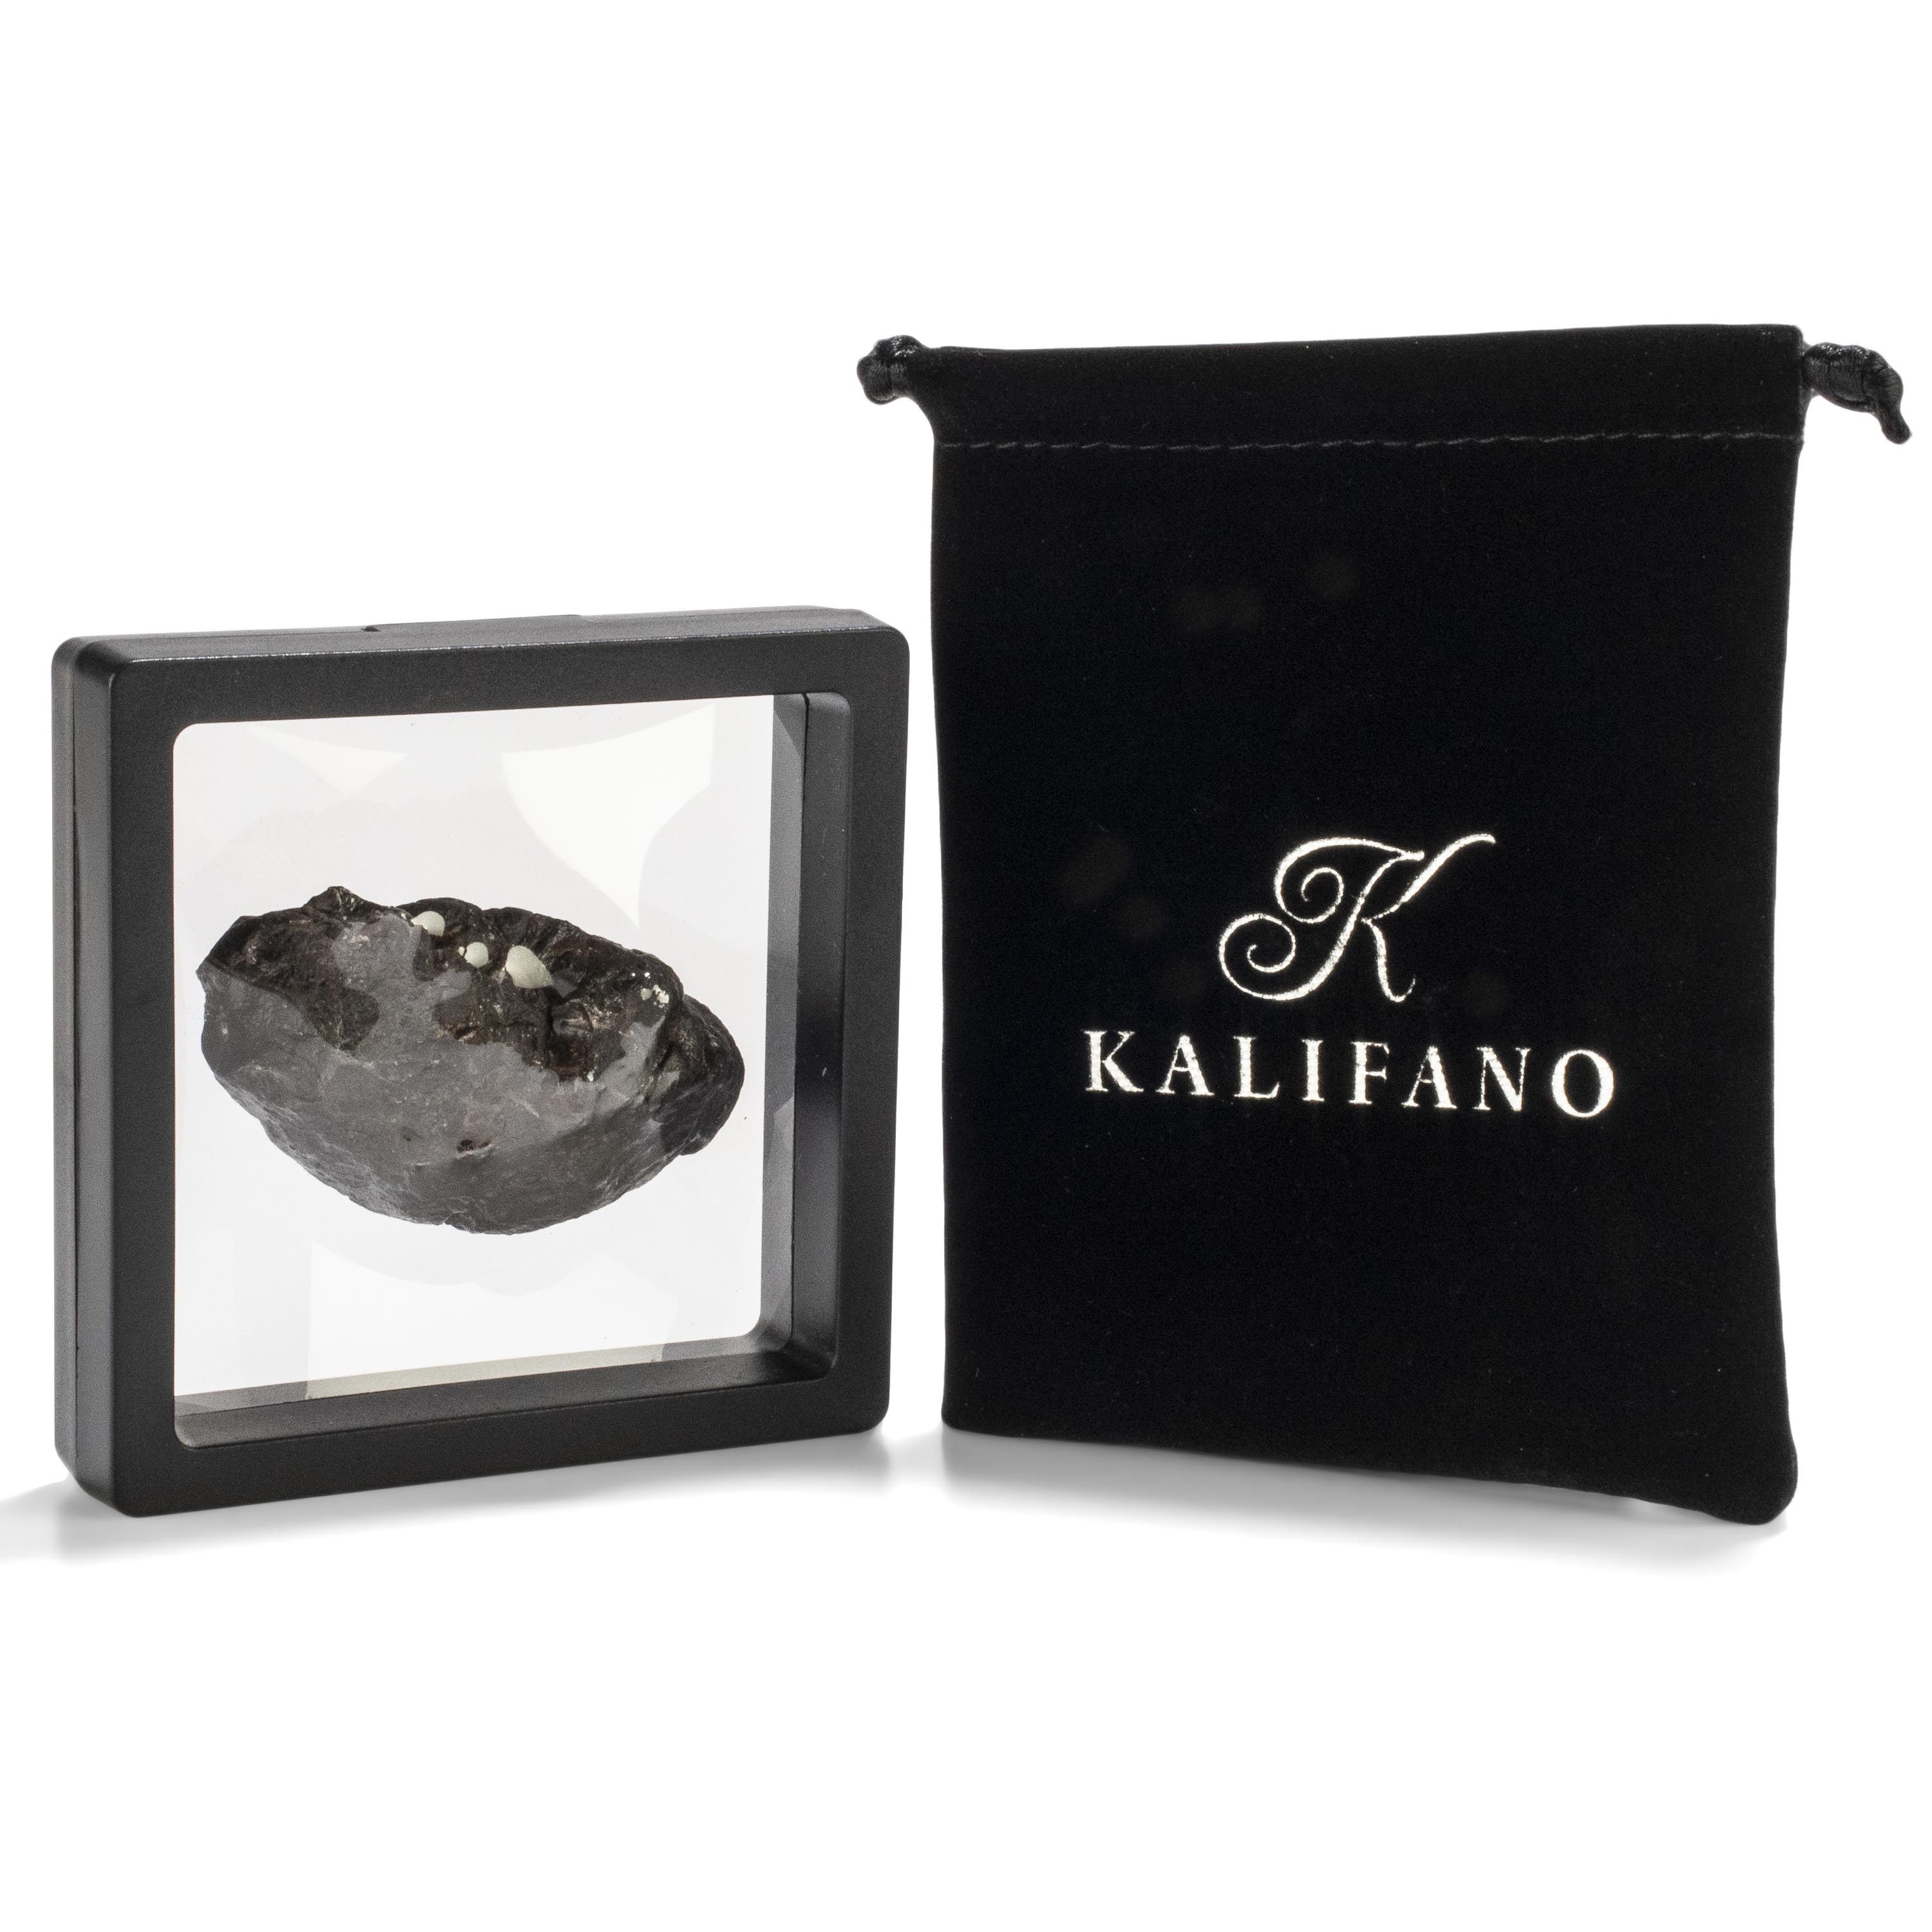 Kalifano Meteorites Sericho Iron Meteorite discovered in Kenya - 123 grams MTCHO2200.002